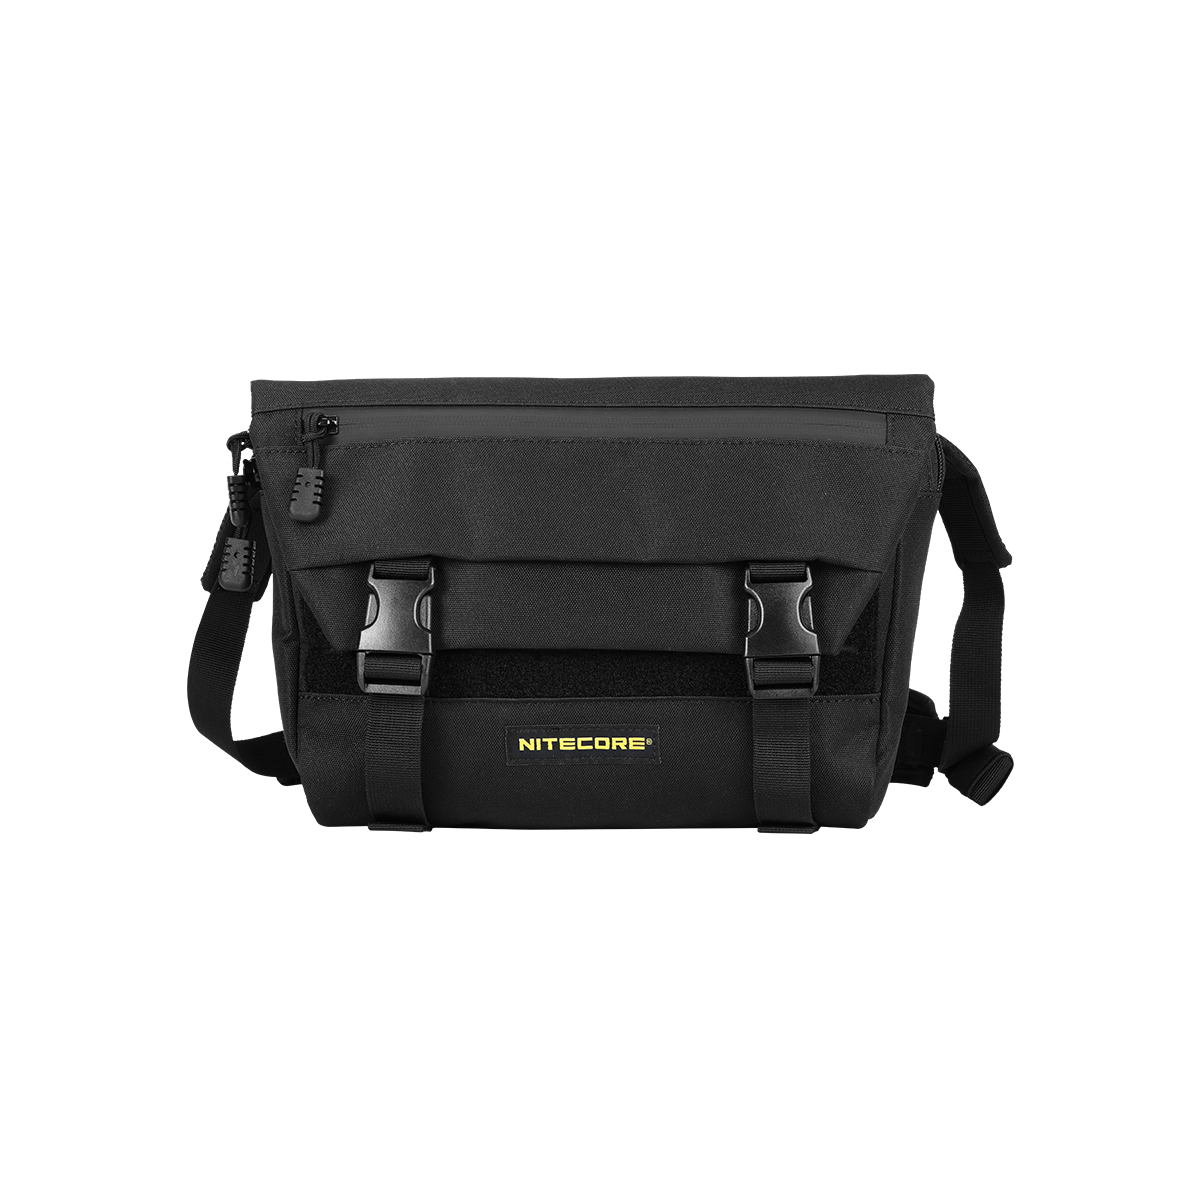 Nitecore SLB02 Flap Messenger Bag